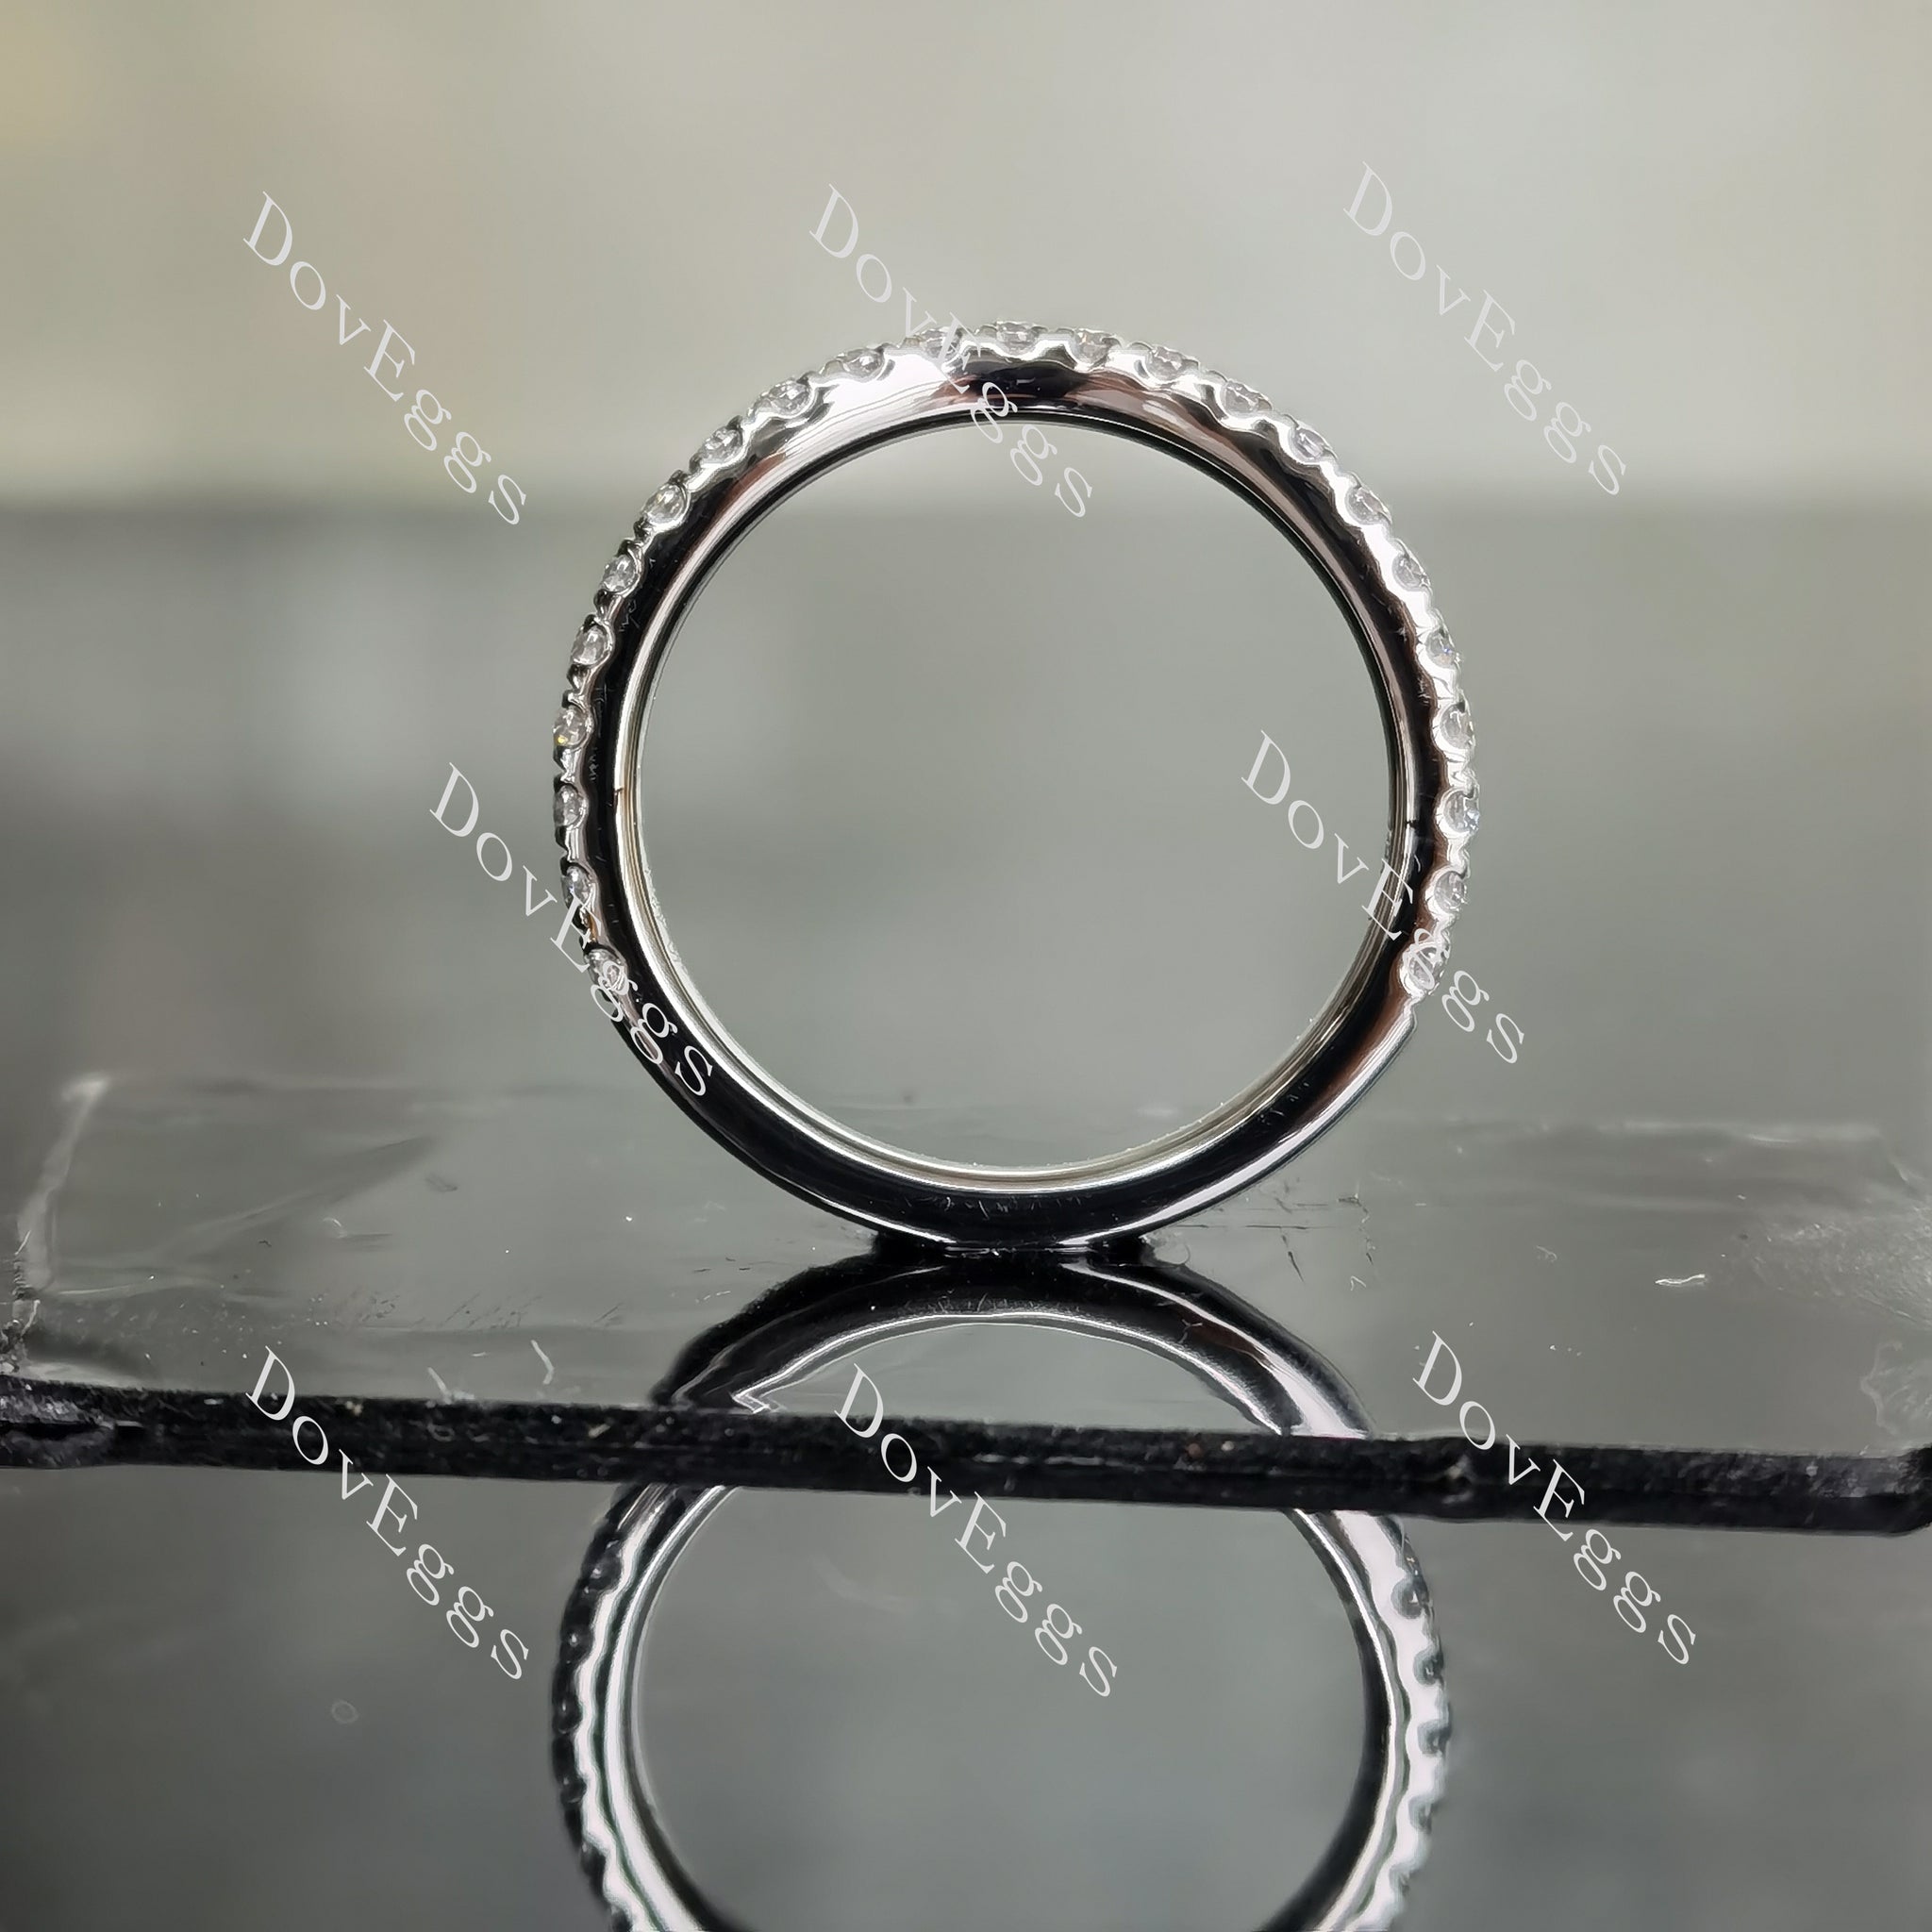 Doveggs round moissanite wedding band for women-2.0mm band width